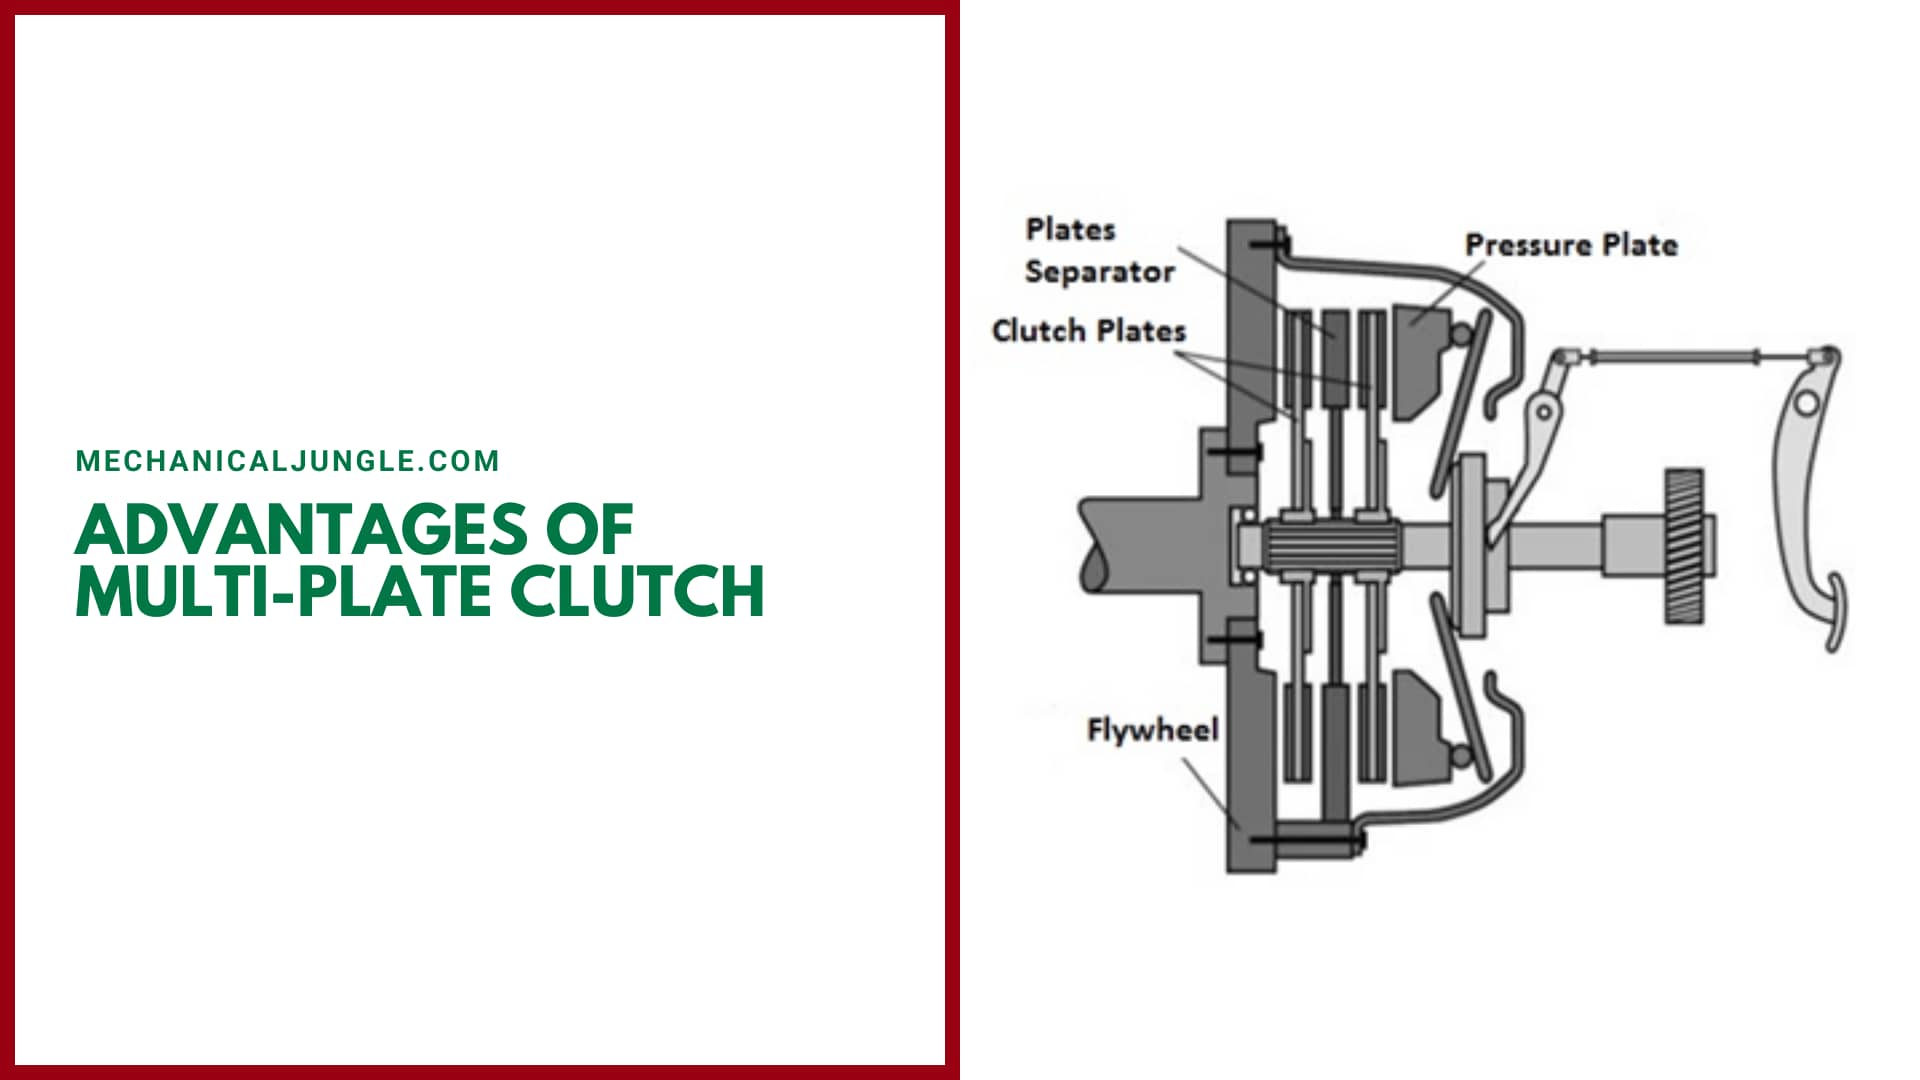 Advantages of Multi-Plate Clutch